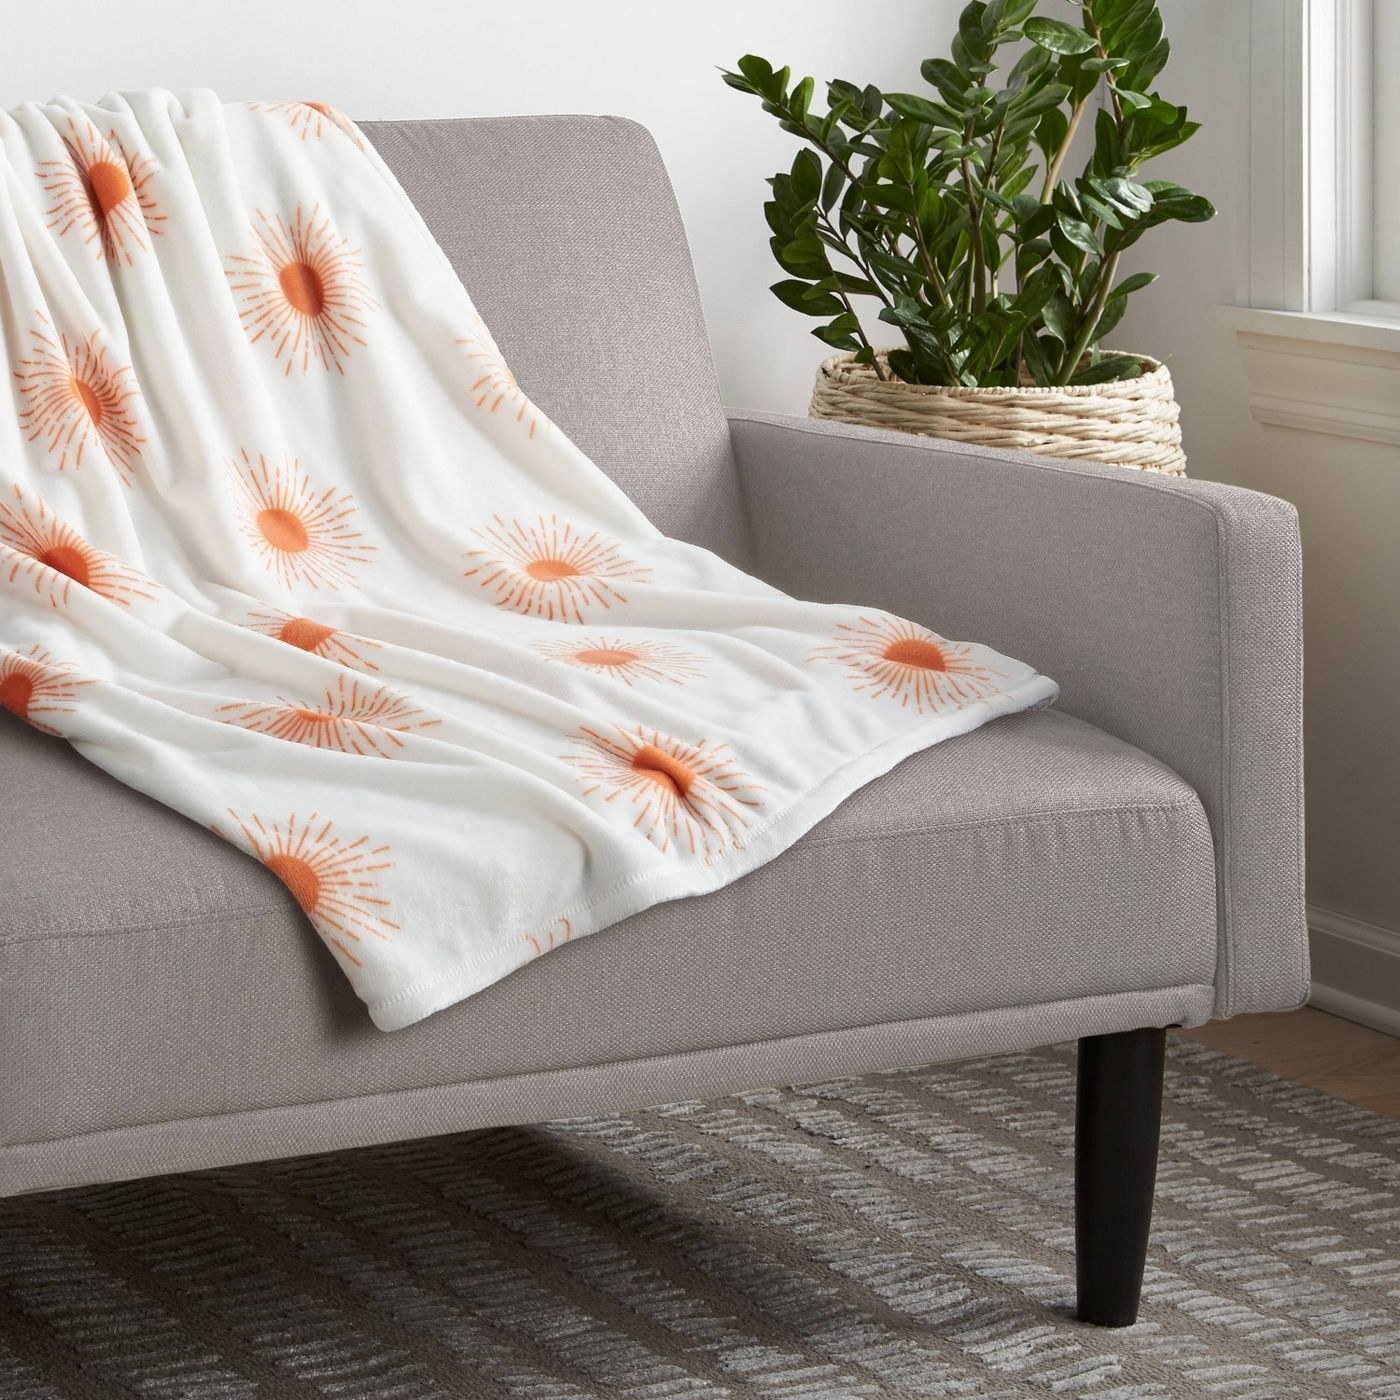 White and orange blanket